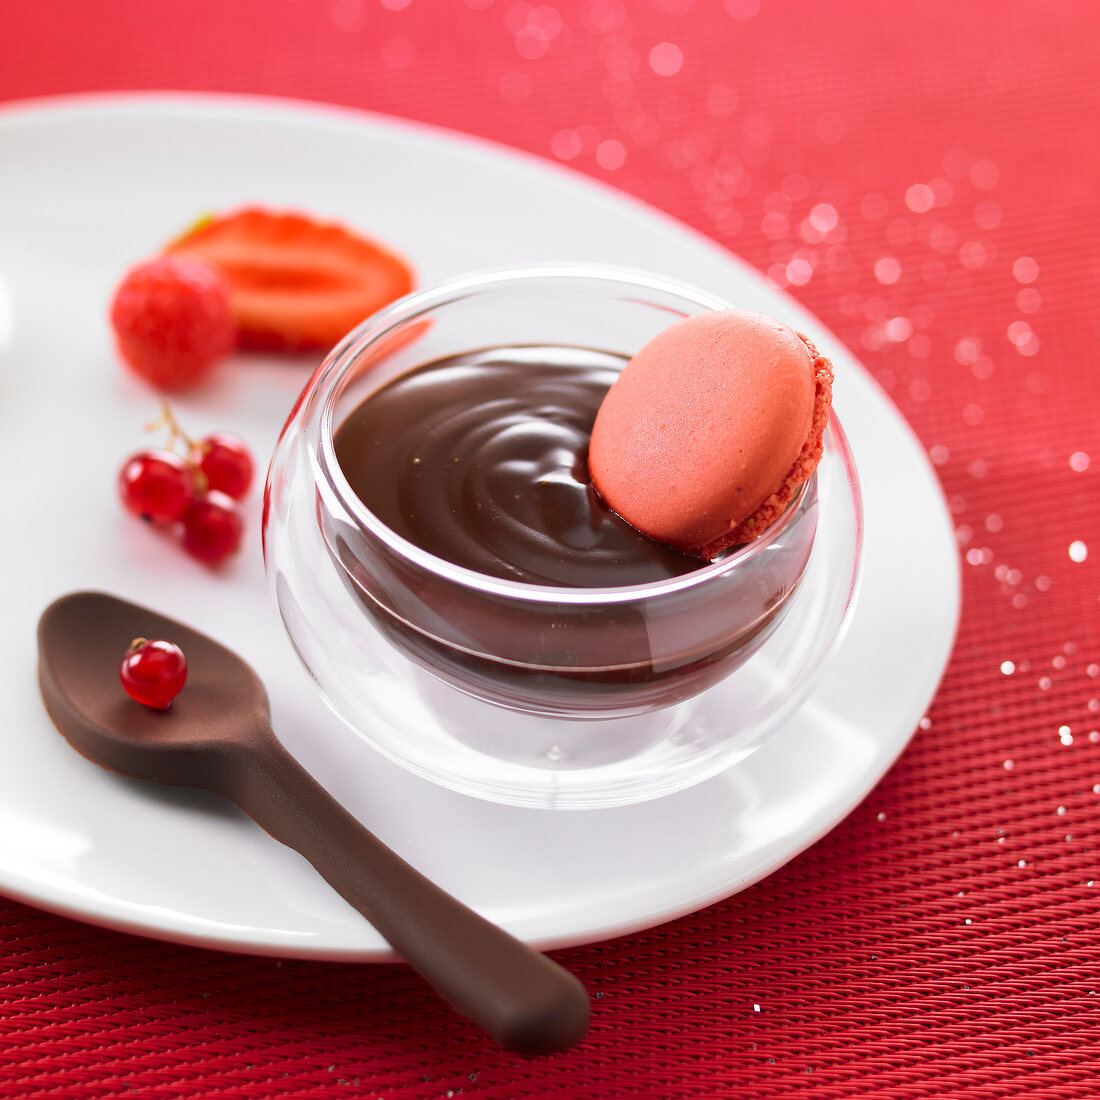 Chocolate cream dessert with raspberry macaroons